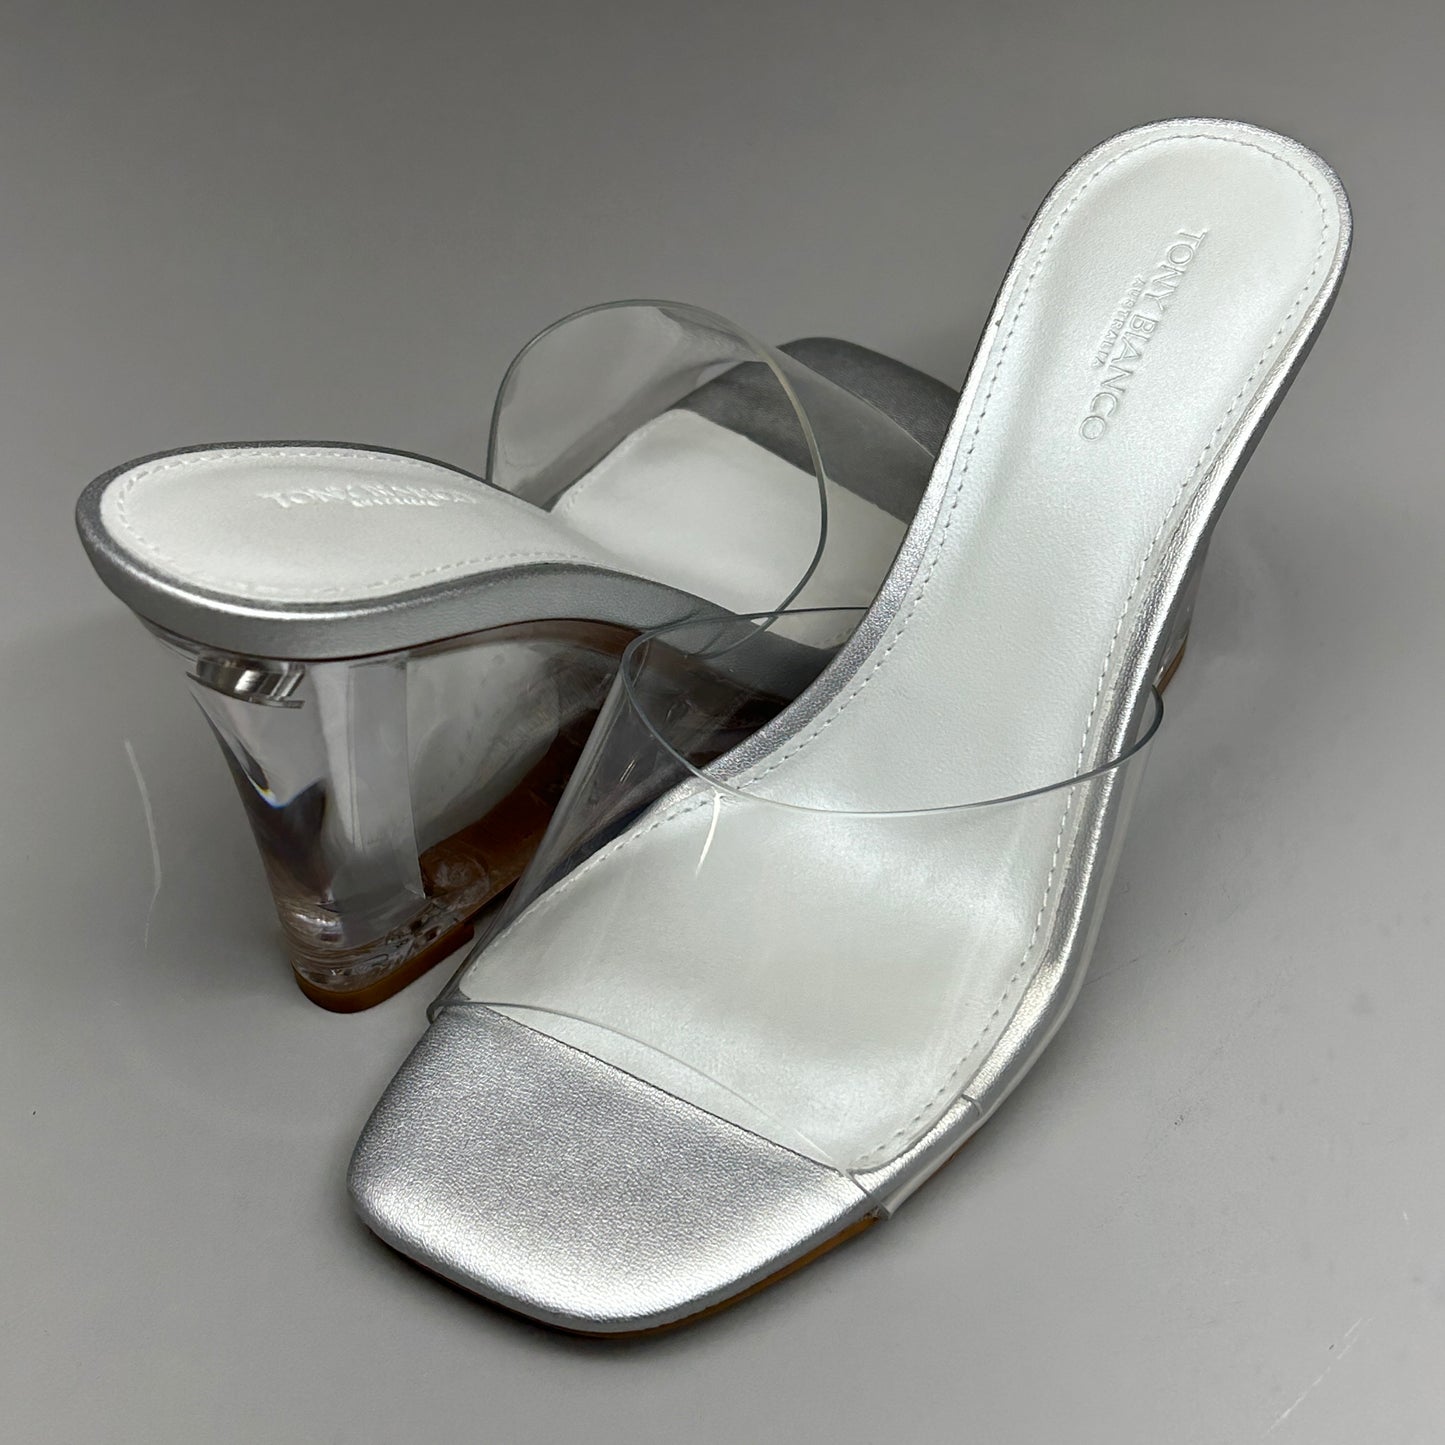 TONY BIANCO Alessi Clear Vinylite/Silver Wedges Women's Heels Sz 5 (New)